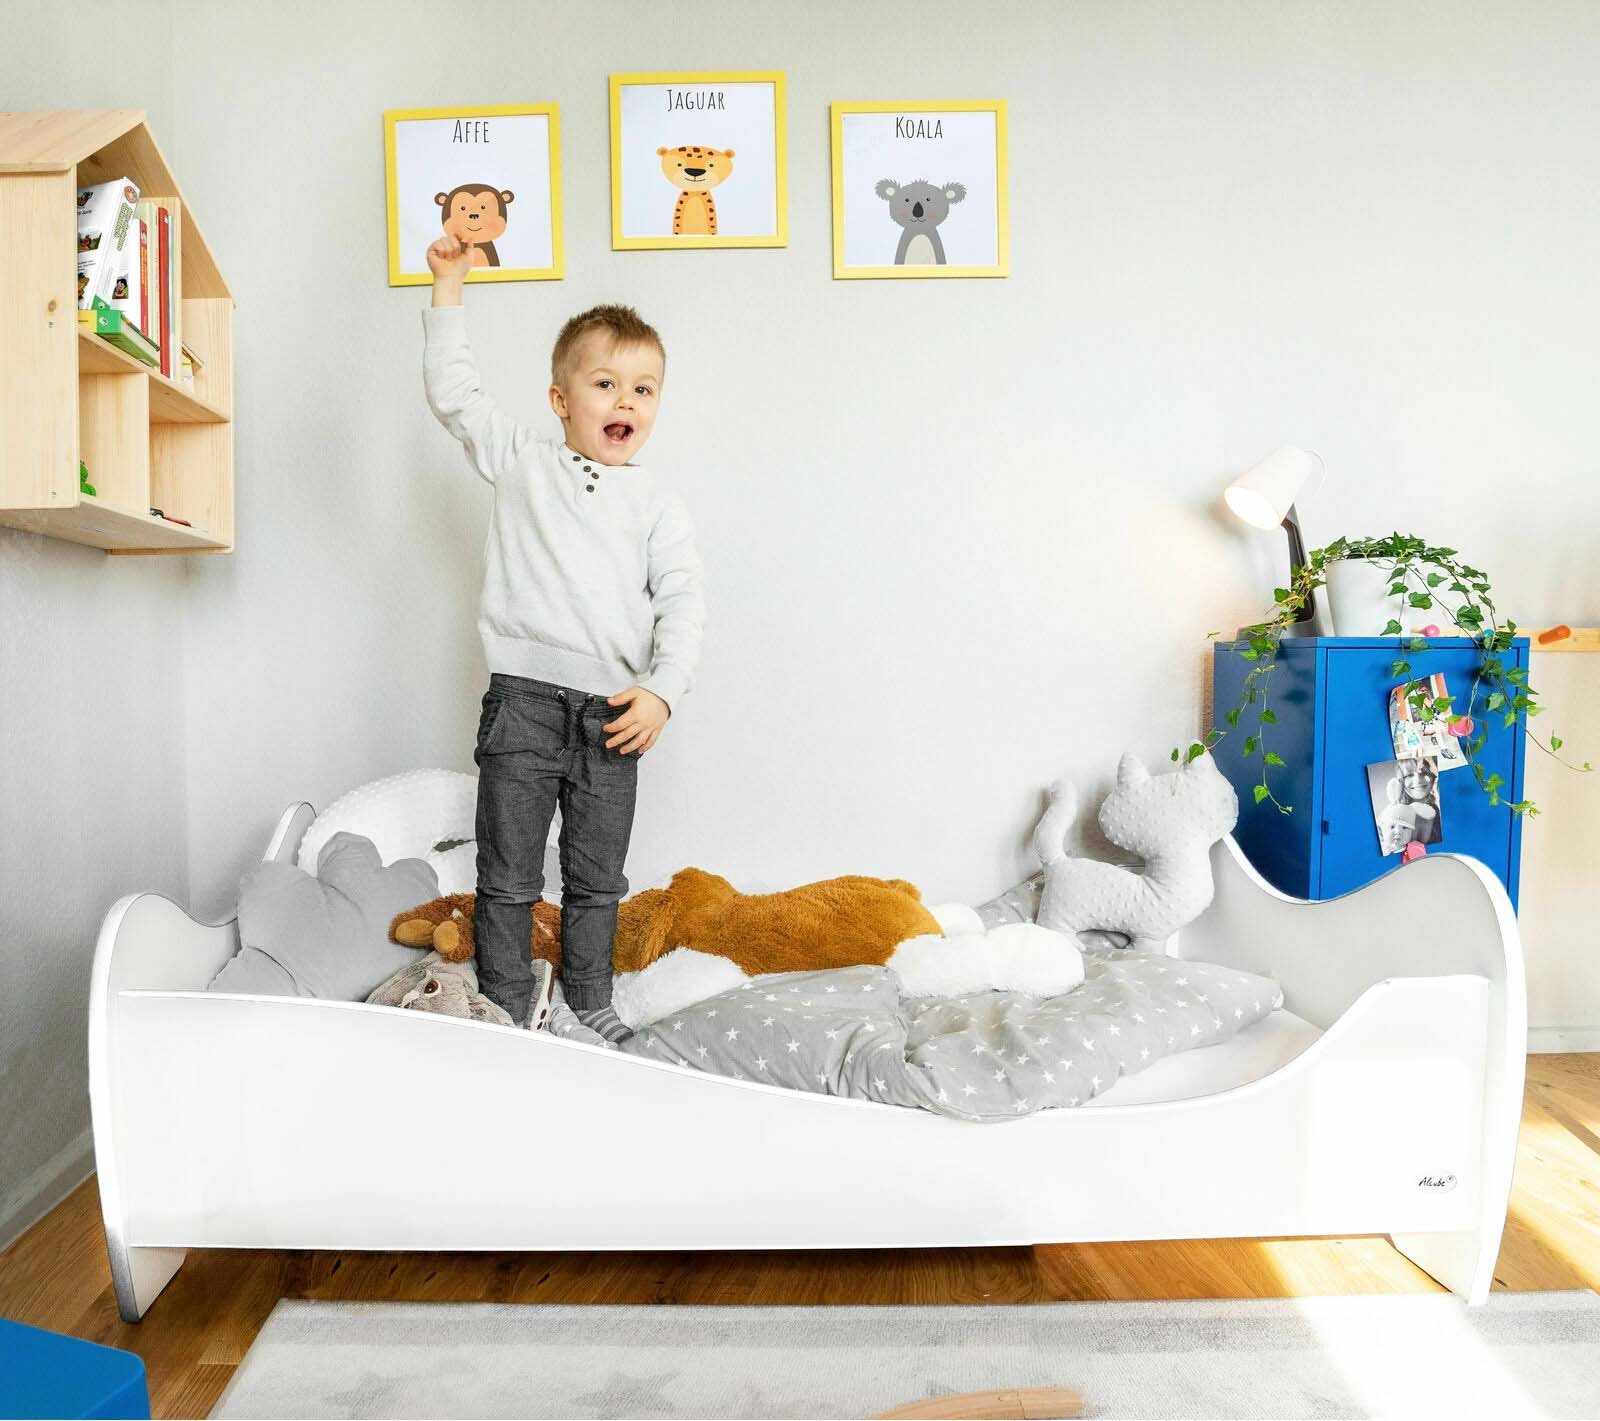 NEU Kinderbett Jugendbett mit Matratze Lattenrost Schublade 160x80 EHWMarket E 